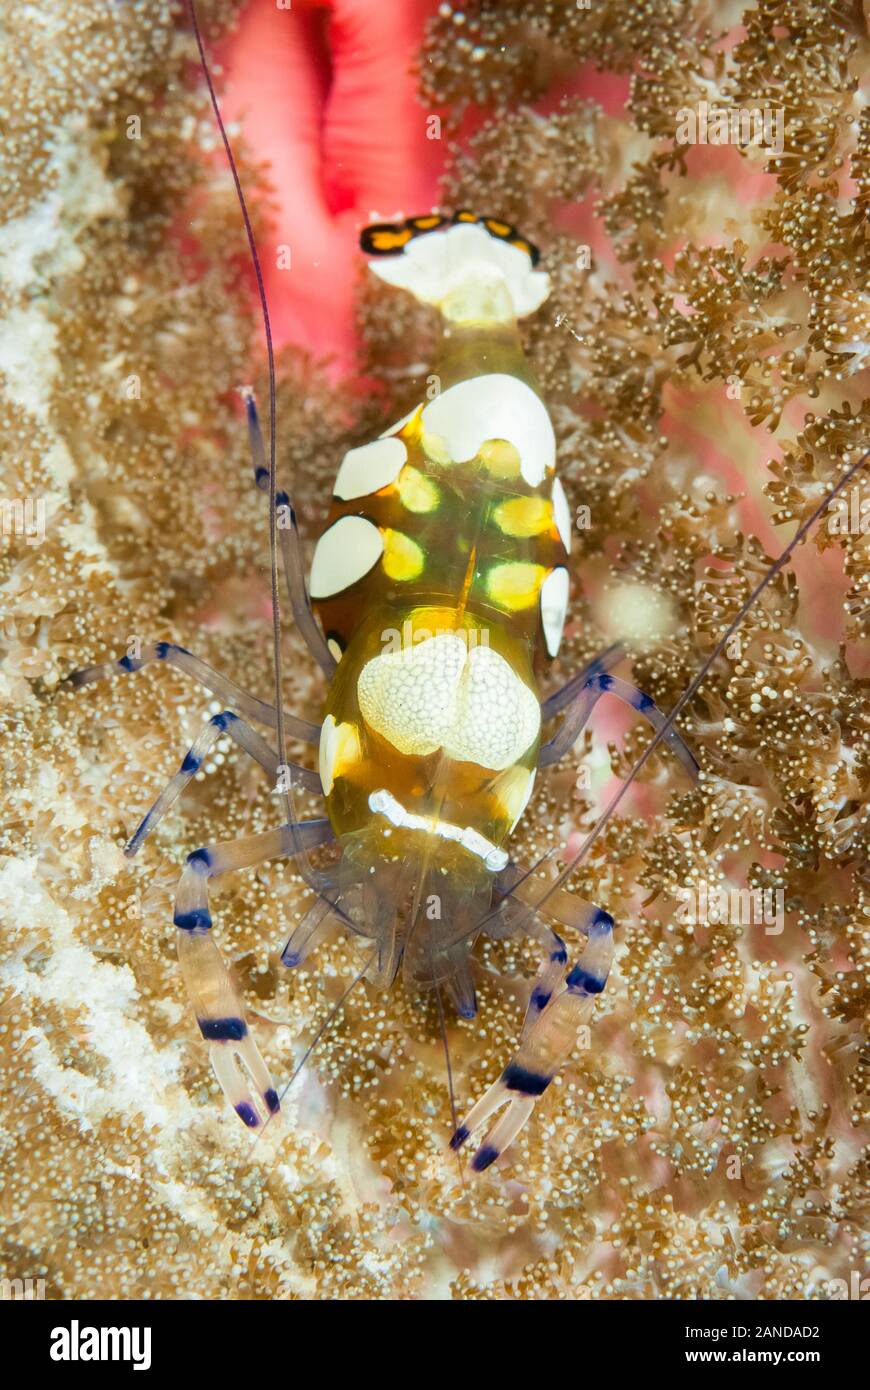 anemone shrim, Periclimenes brevicarpalis, Moalboal, Cebu, Philippines, Pacific Ocean Stock Photo